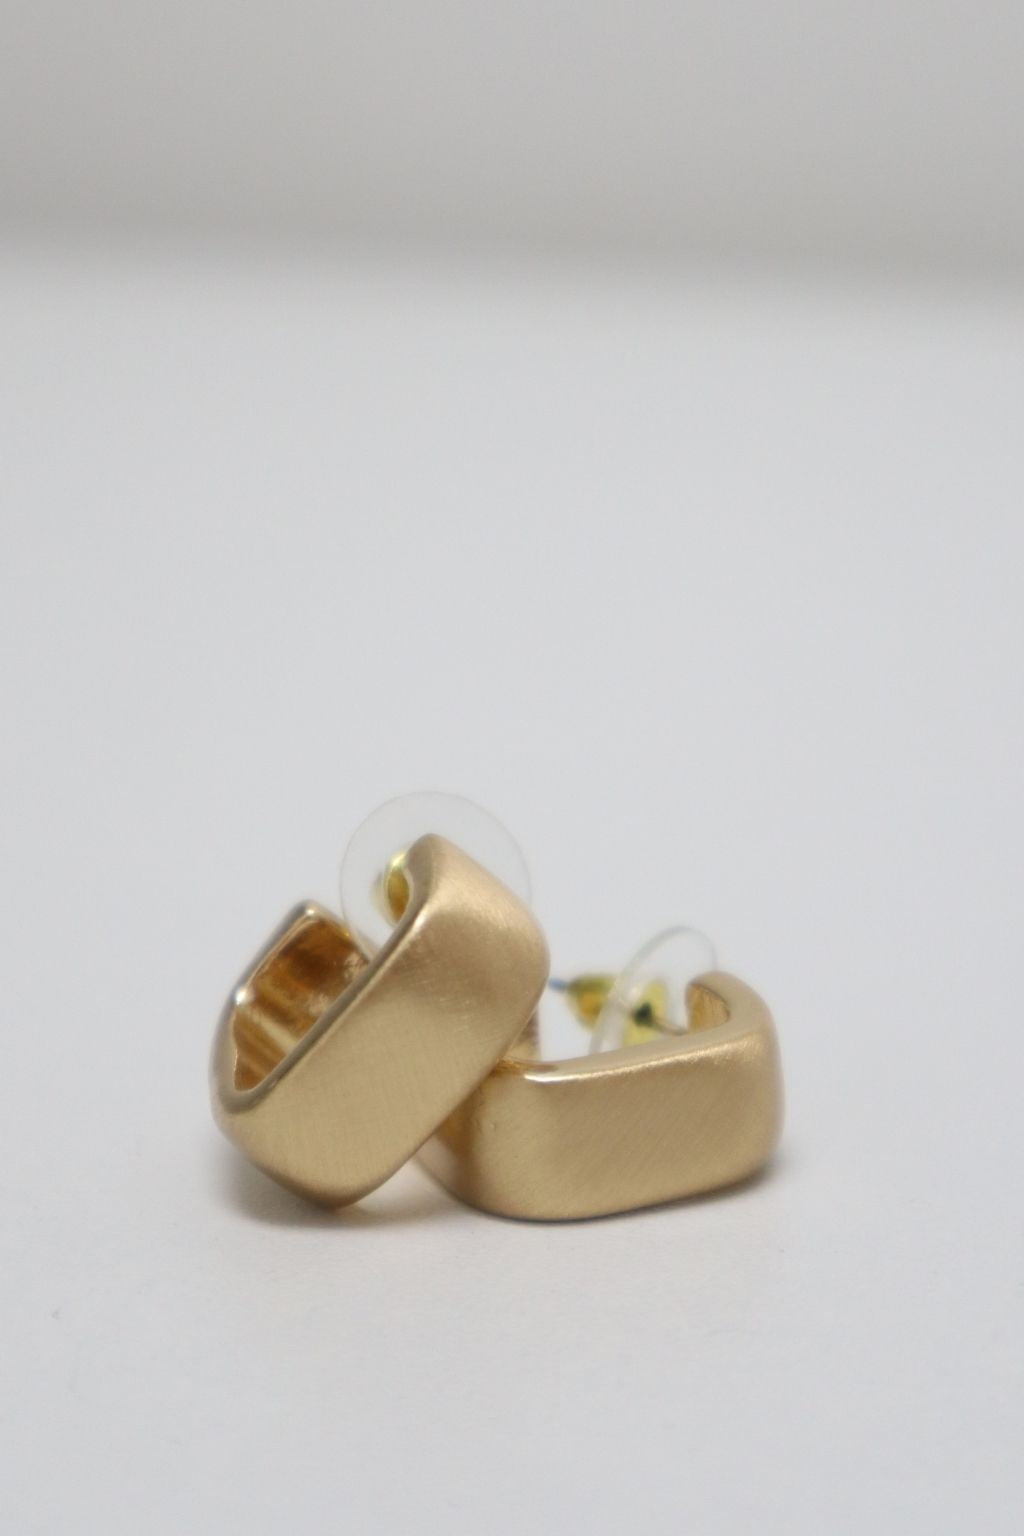 Matte Gold Square Huggie Earrings